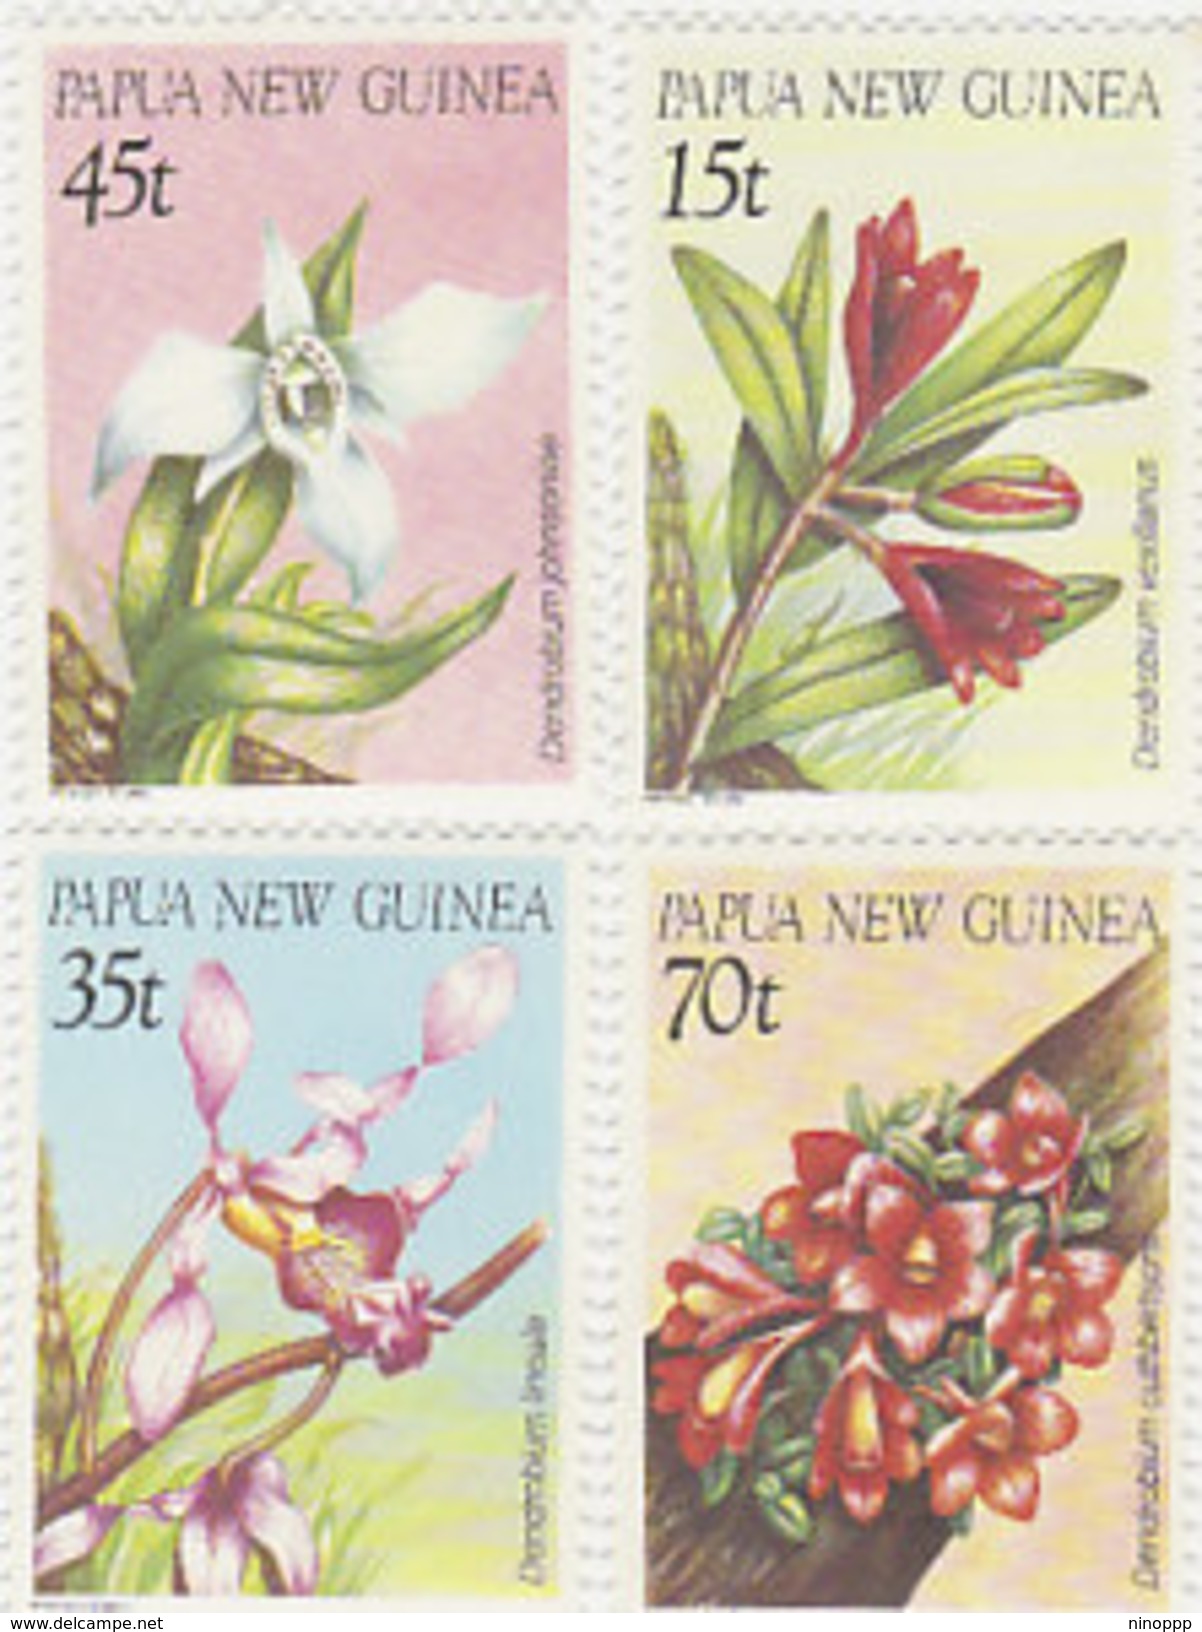 Papua New Guinea SG 531-534 1986 Orchids MNH - Papua New Guinea